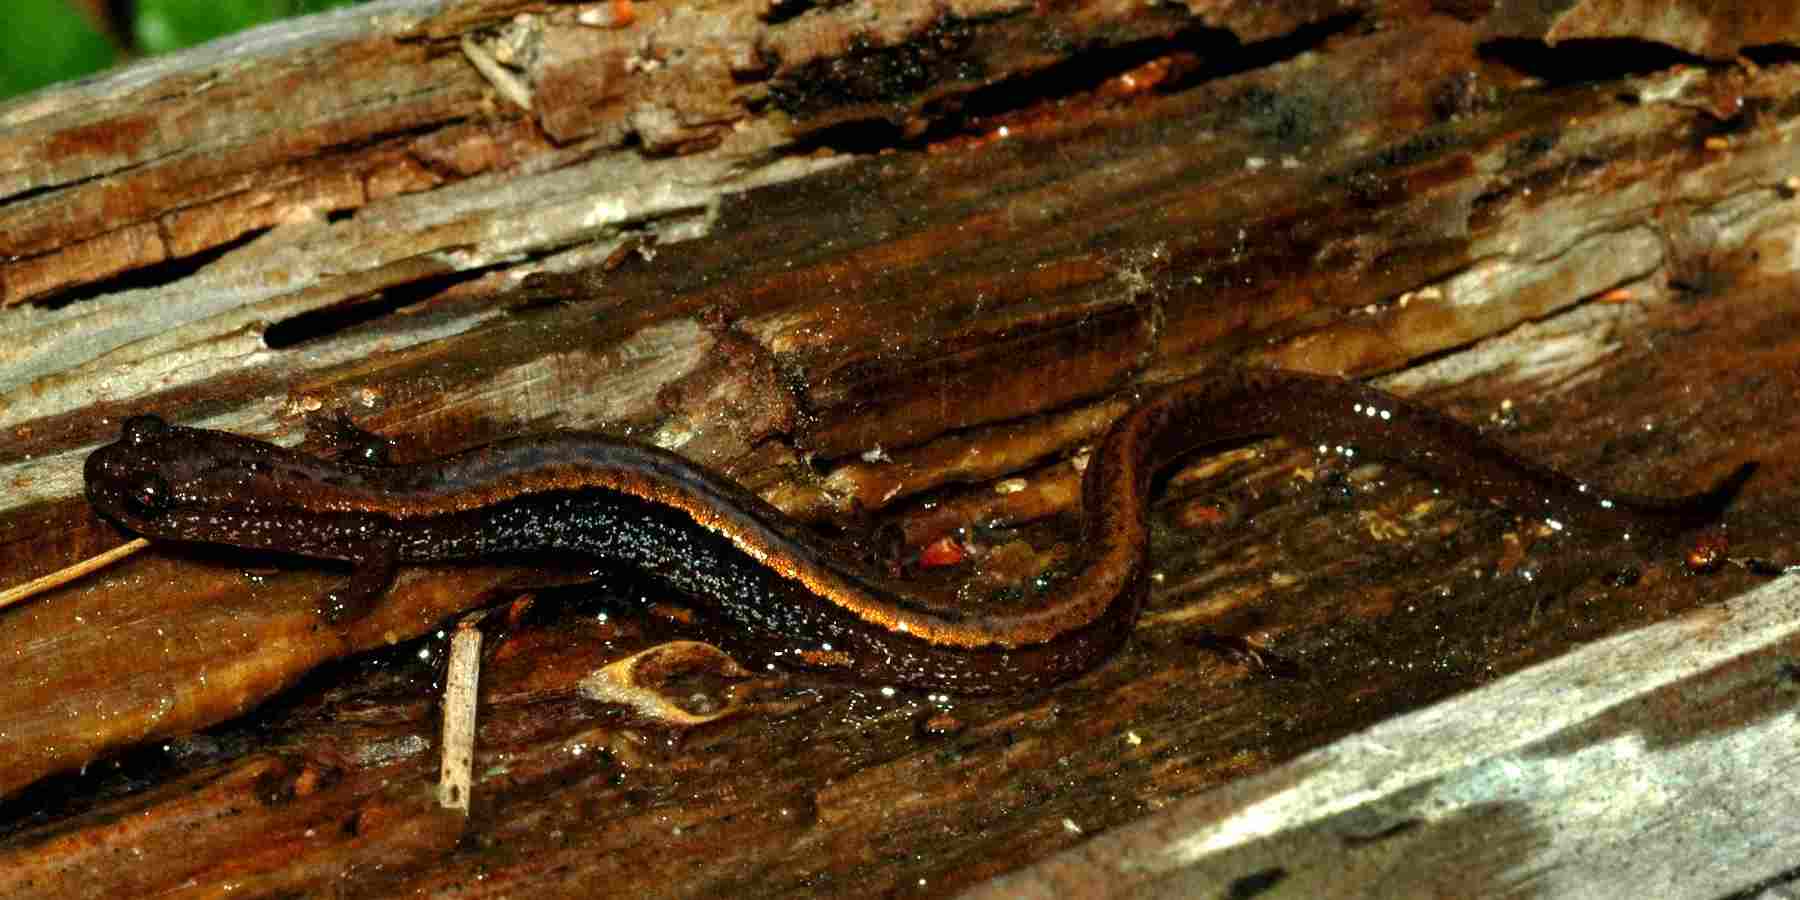 Dwarf Salamander Fun Facts